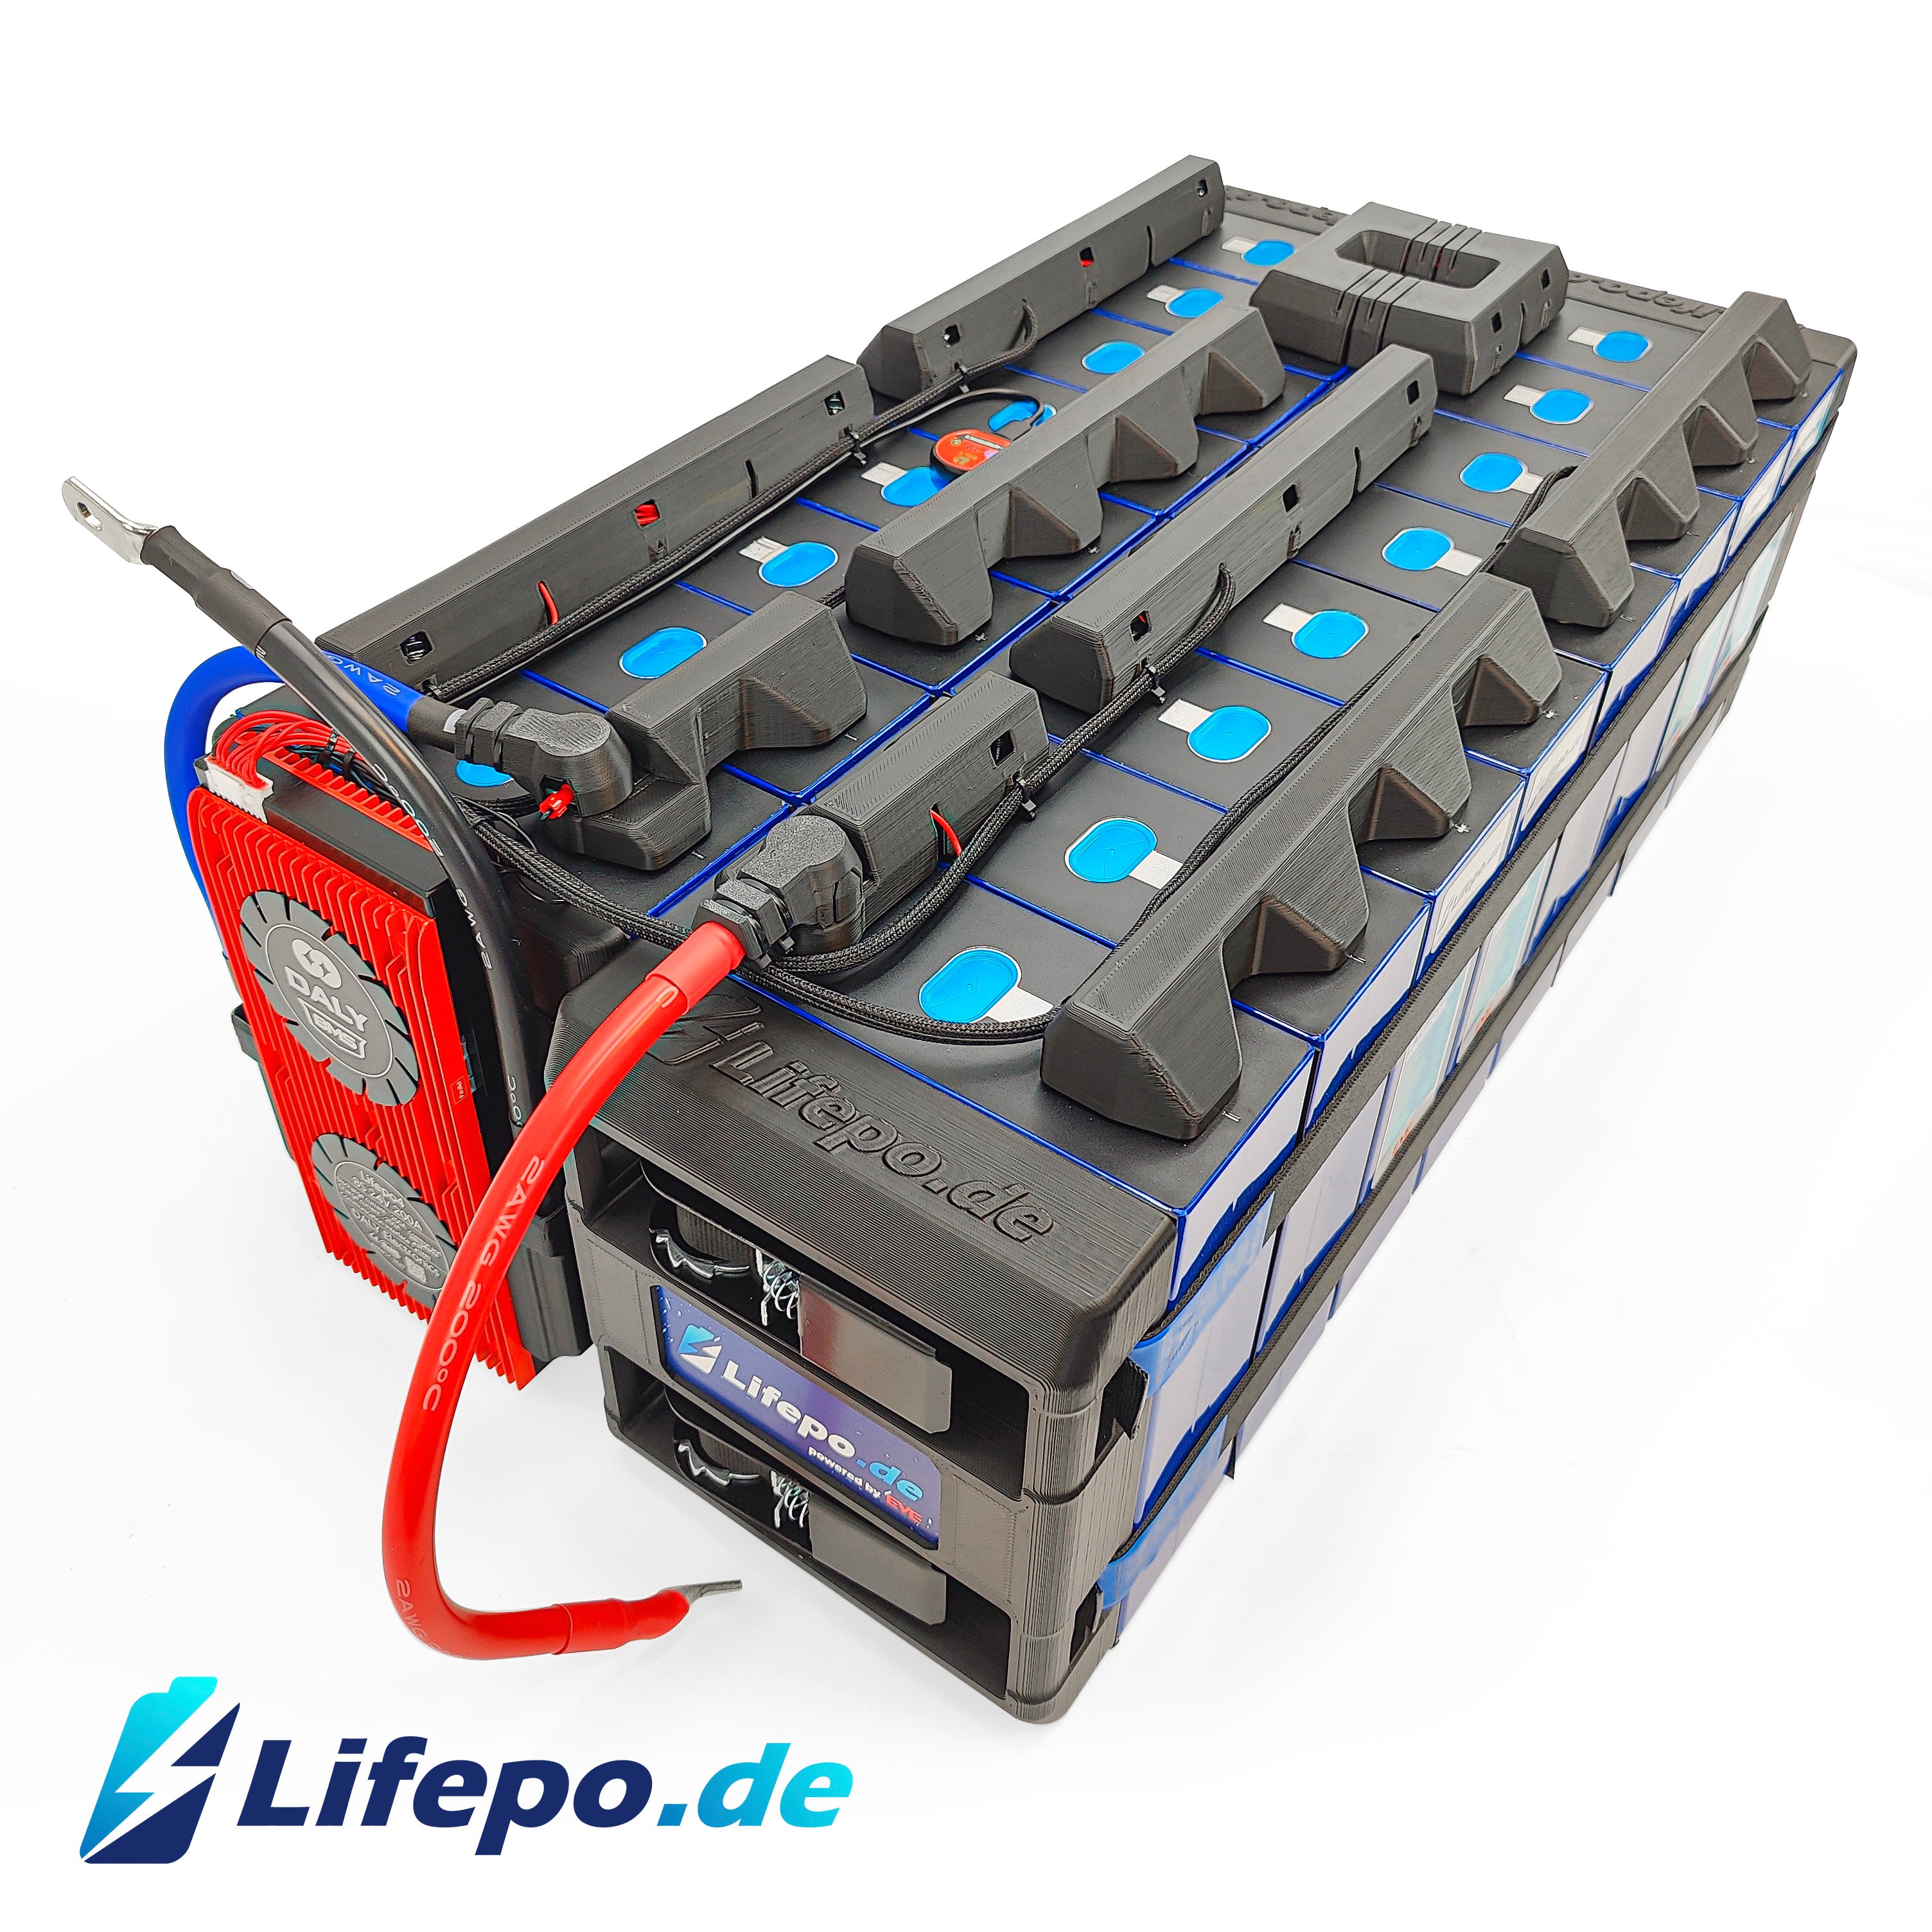 Dirt Cheap 24V Preassembled LiFePO4 Battery: Beginner Friendly Tutorial! 